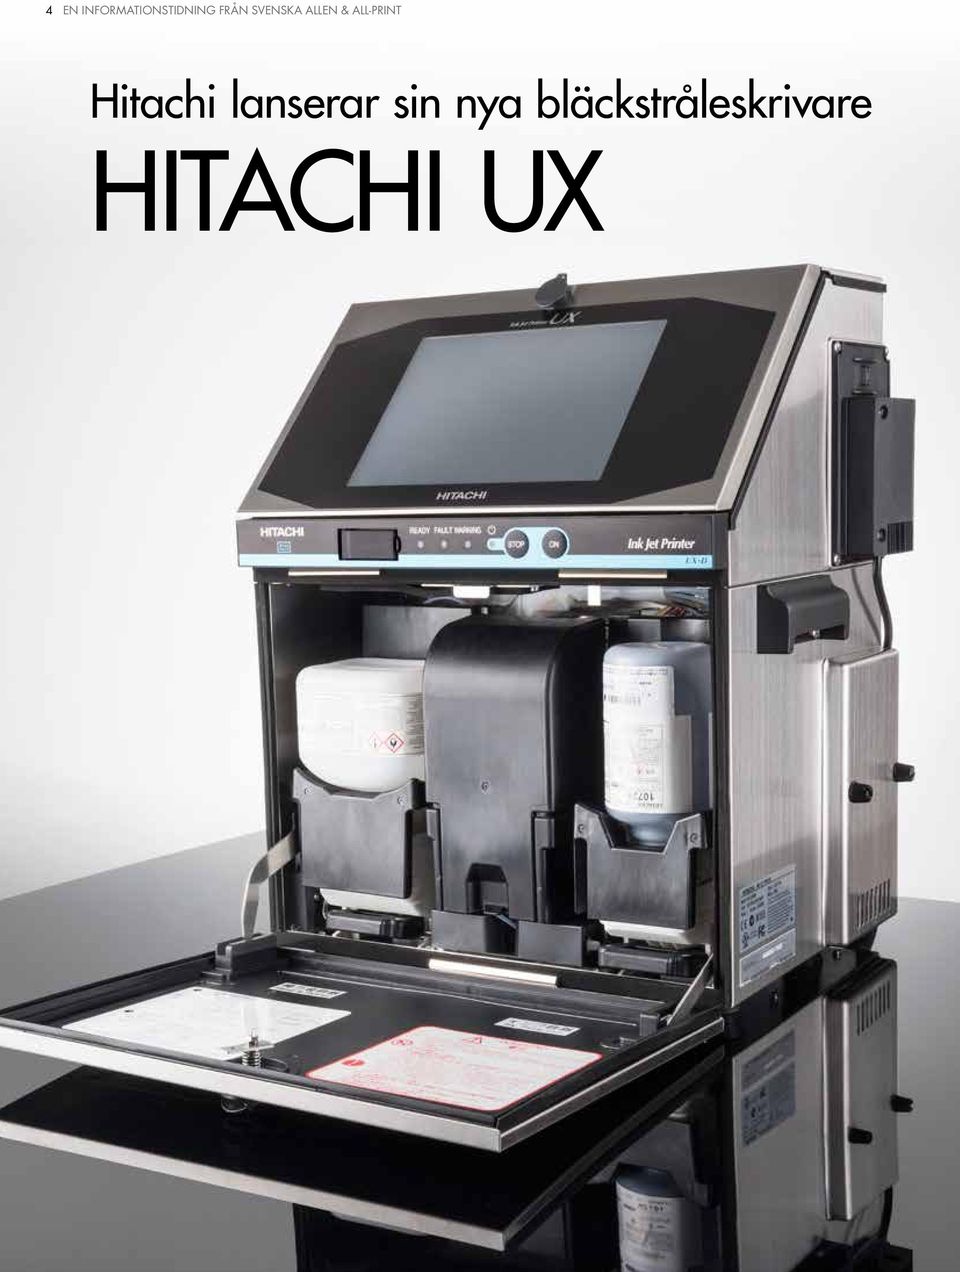 ALL-PRINT Hitachi lanserar